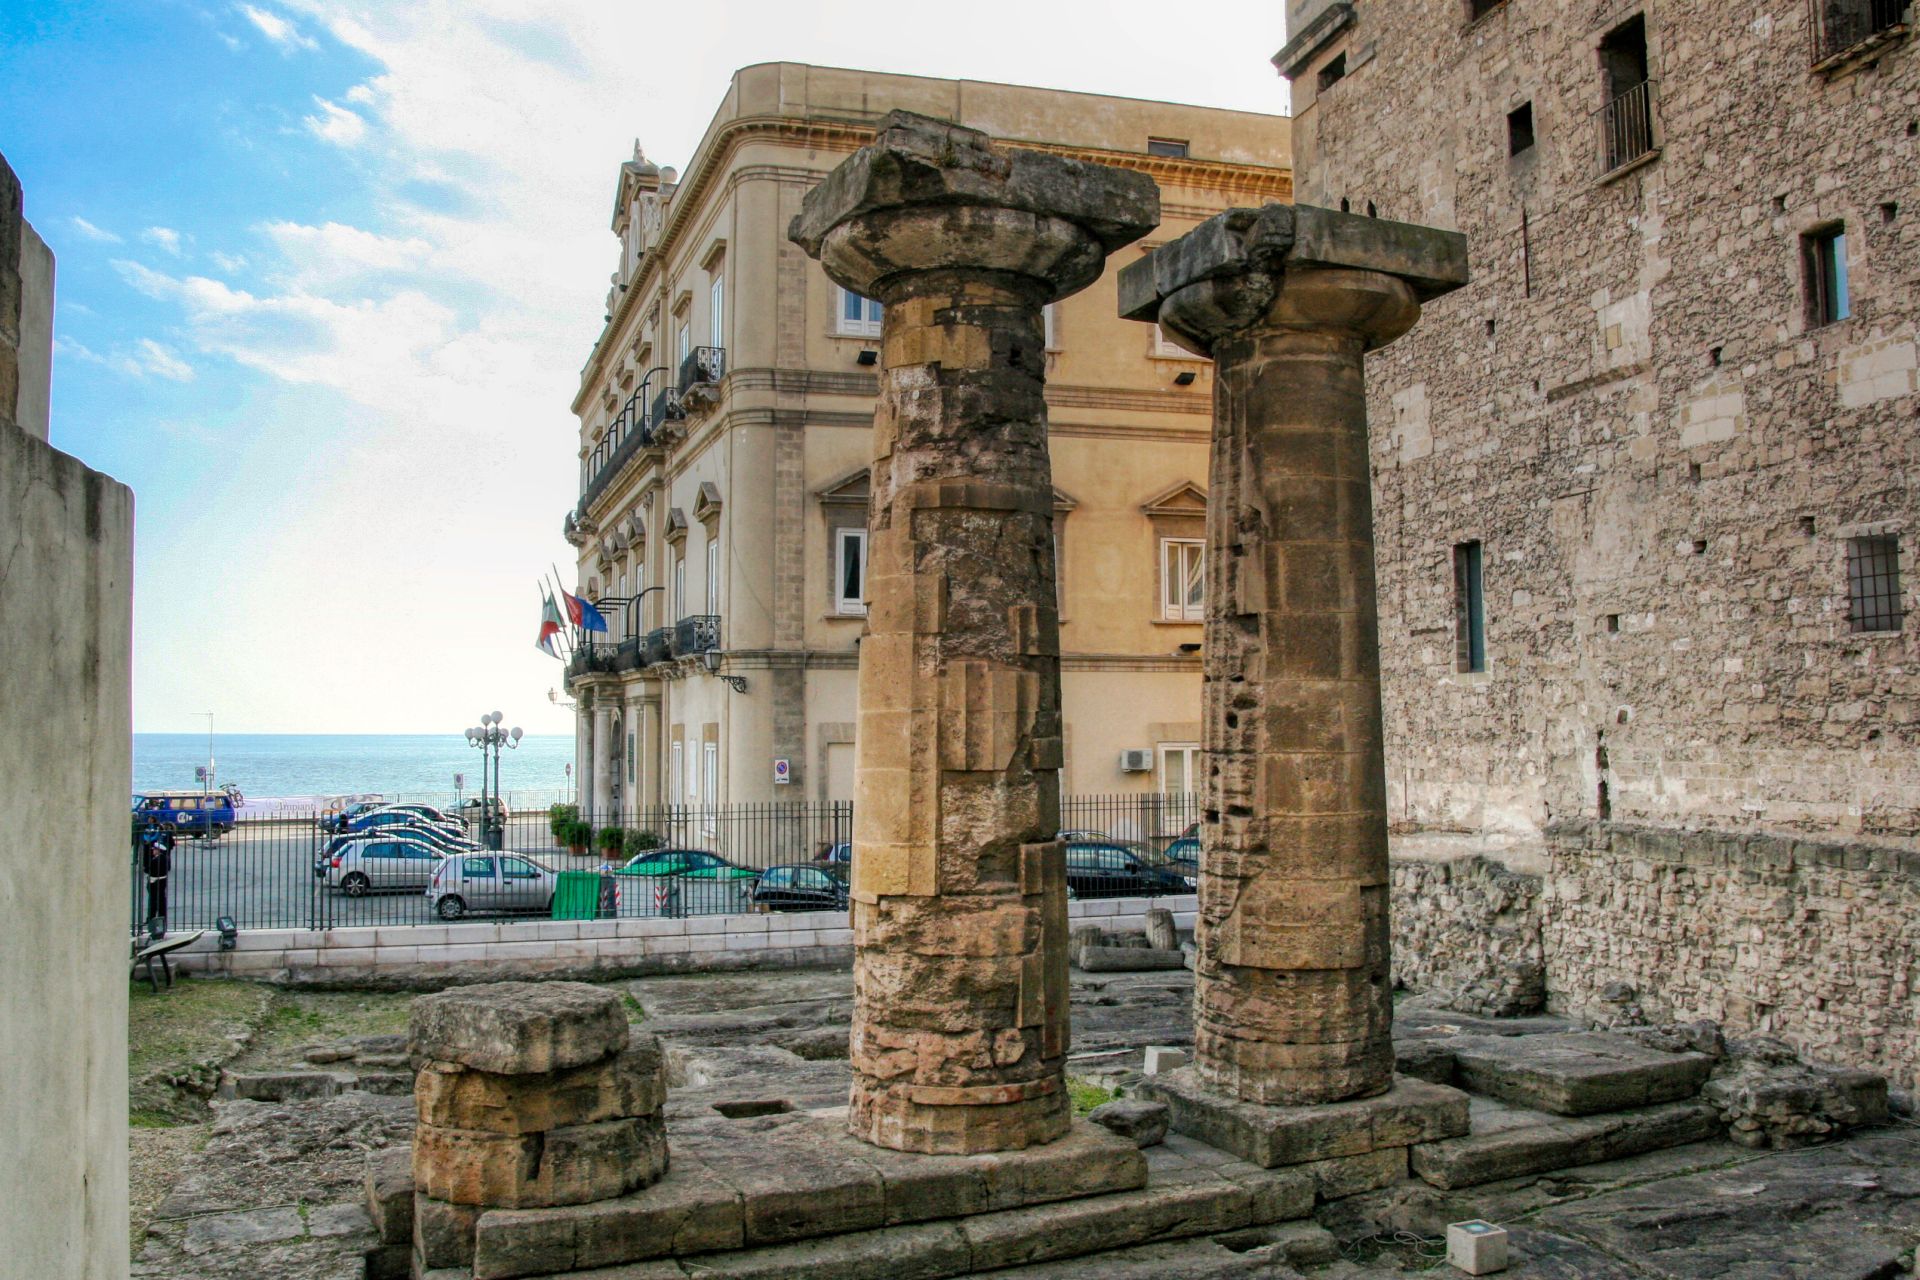 The-remaining-columns-of-the-Temple-of-Poseidon-or-Doric-Temple-in-Taranto-Puglia-Italy